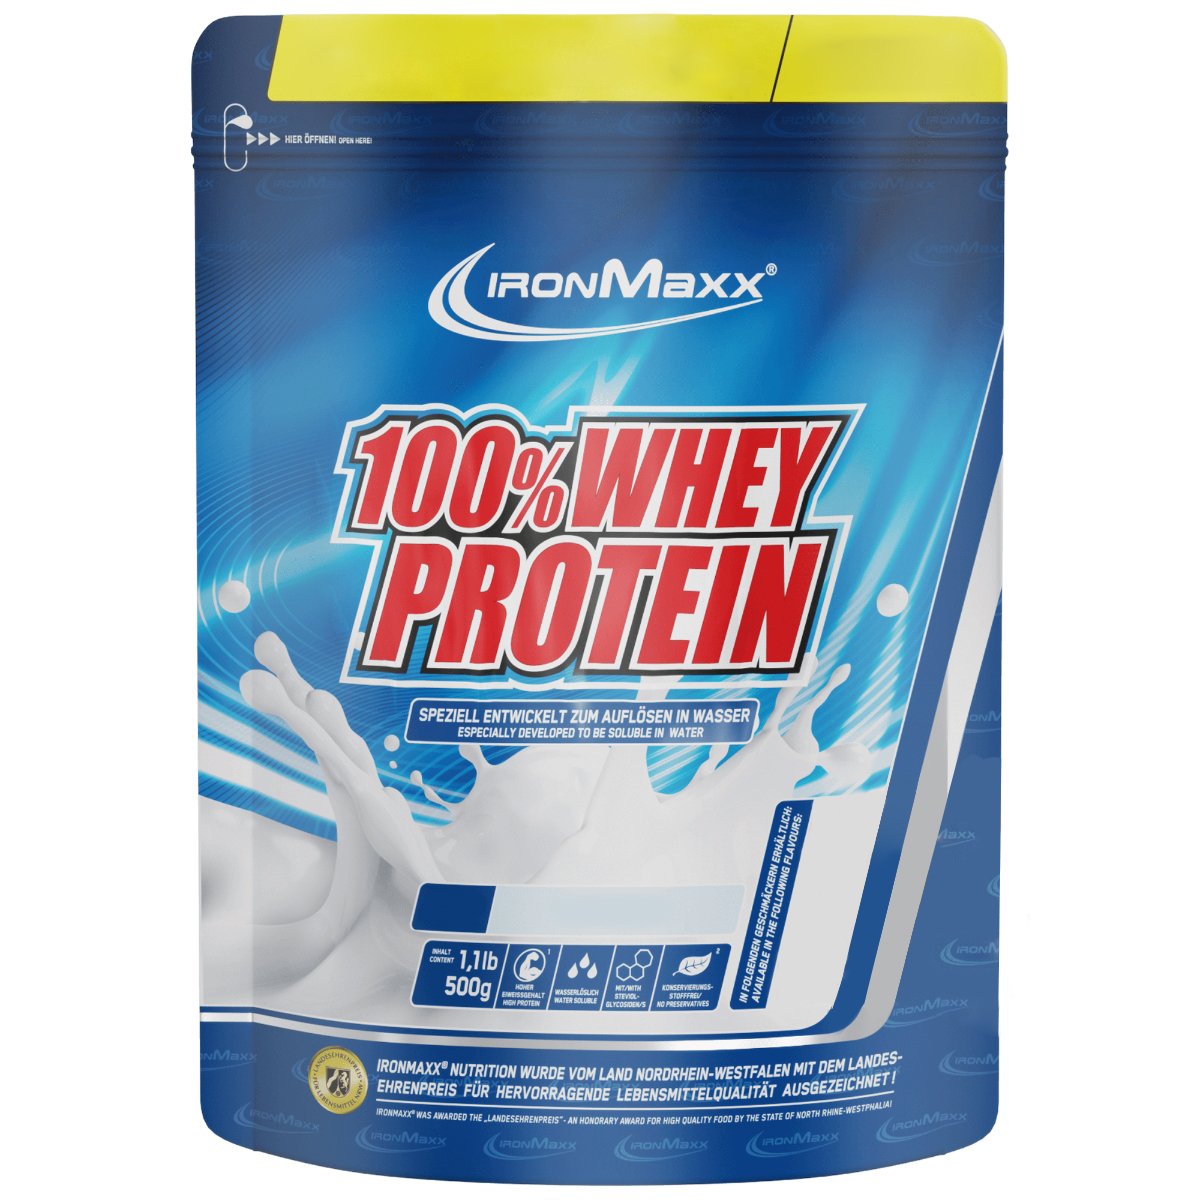 Протеин Ironmaxx 100% Whey Protein, 500 грамм Белый шоколад-кокос,  ml, IronMaxx. Protein. Mass Gain recovery Anti-catabolic properties 